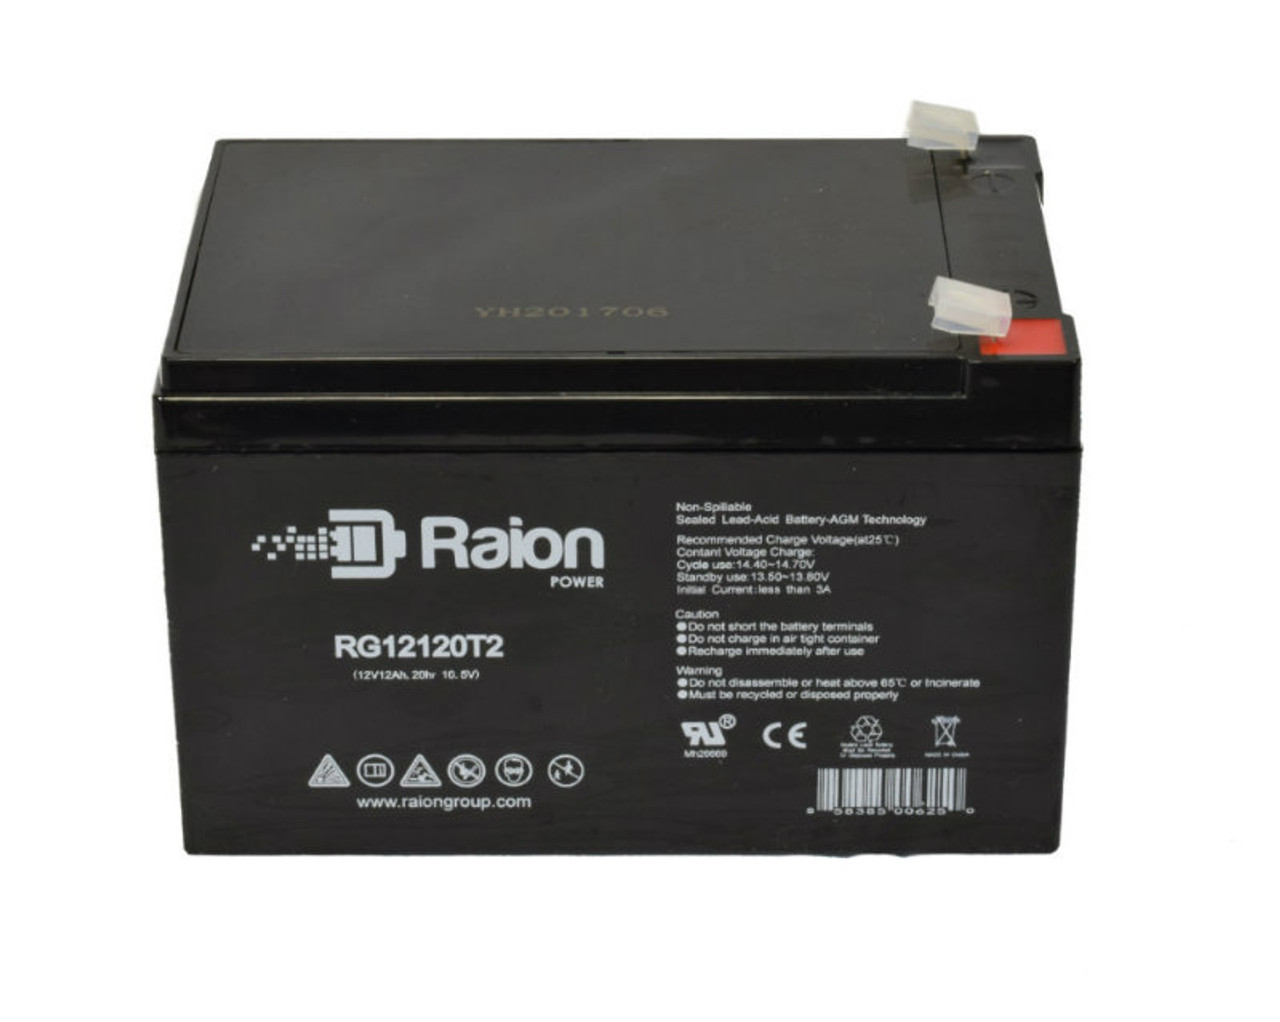 Raion Power RG12120T2 SLA Battery for Siemens Healthineers Mobilett Plus HP X-Ray